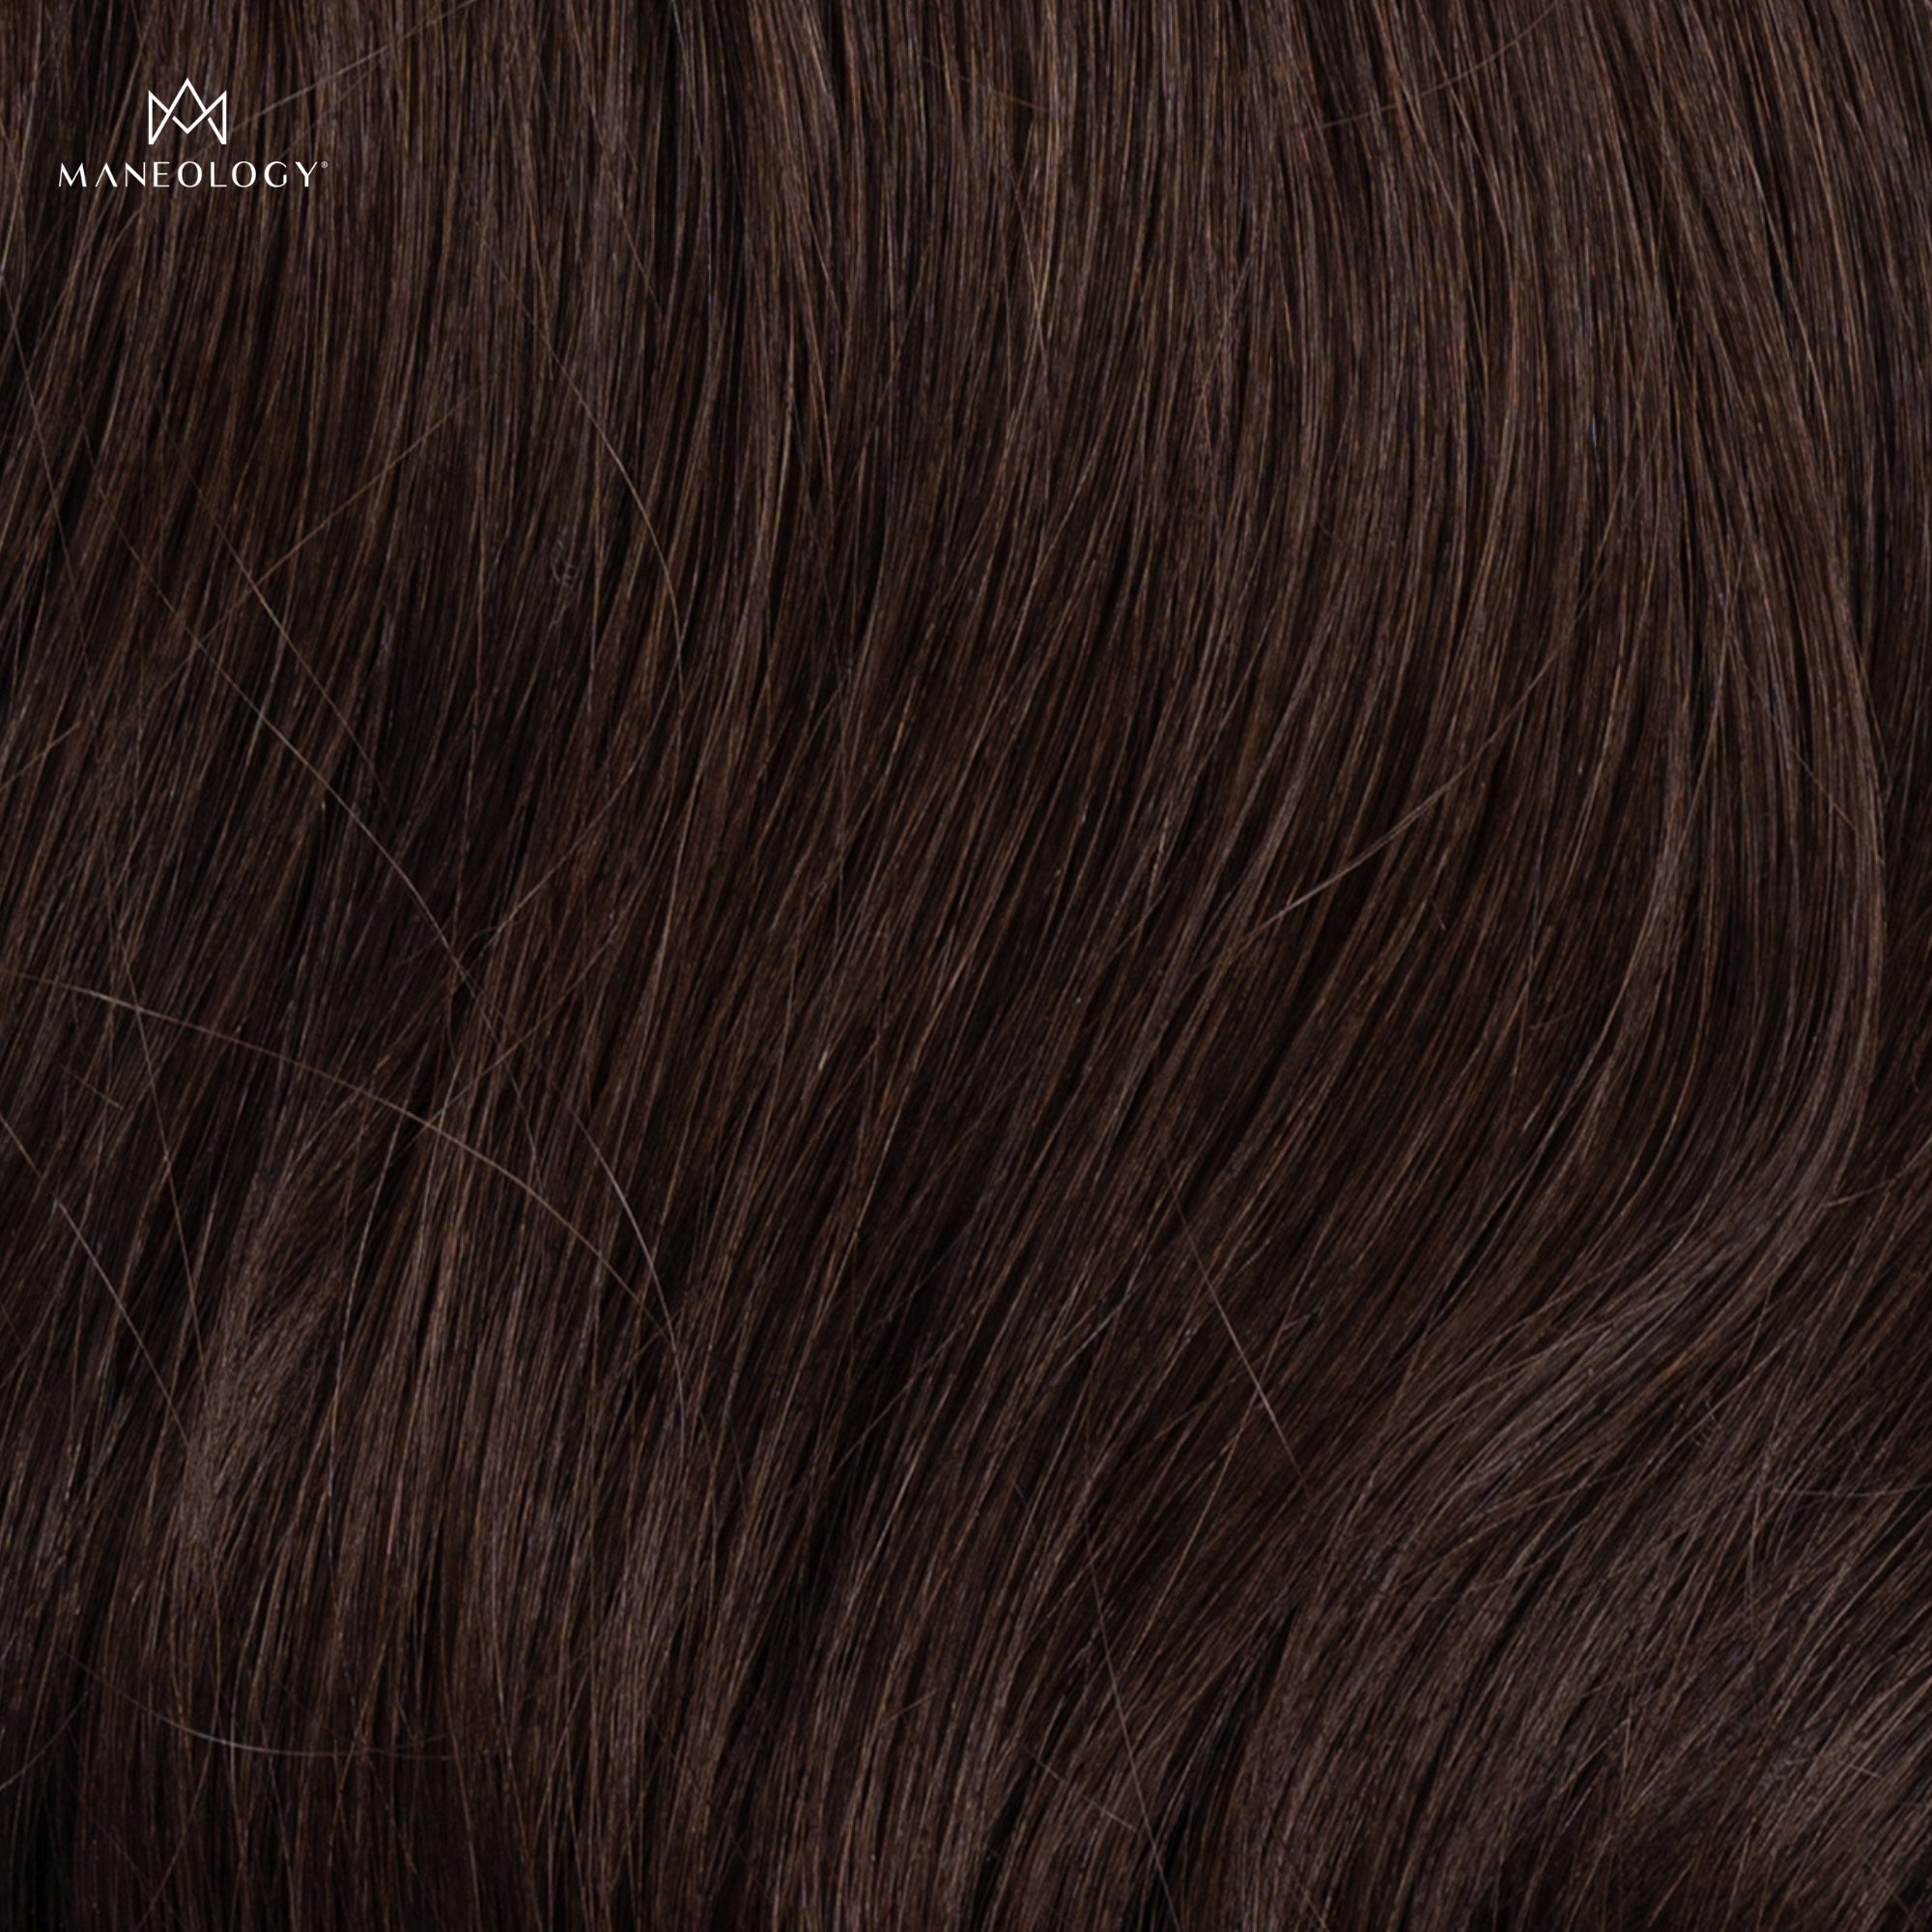 Seamless Tape in Hair Extensions Dark Brown - Maneology Hair Extensions